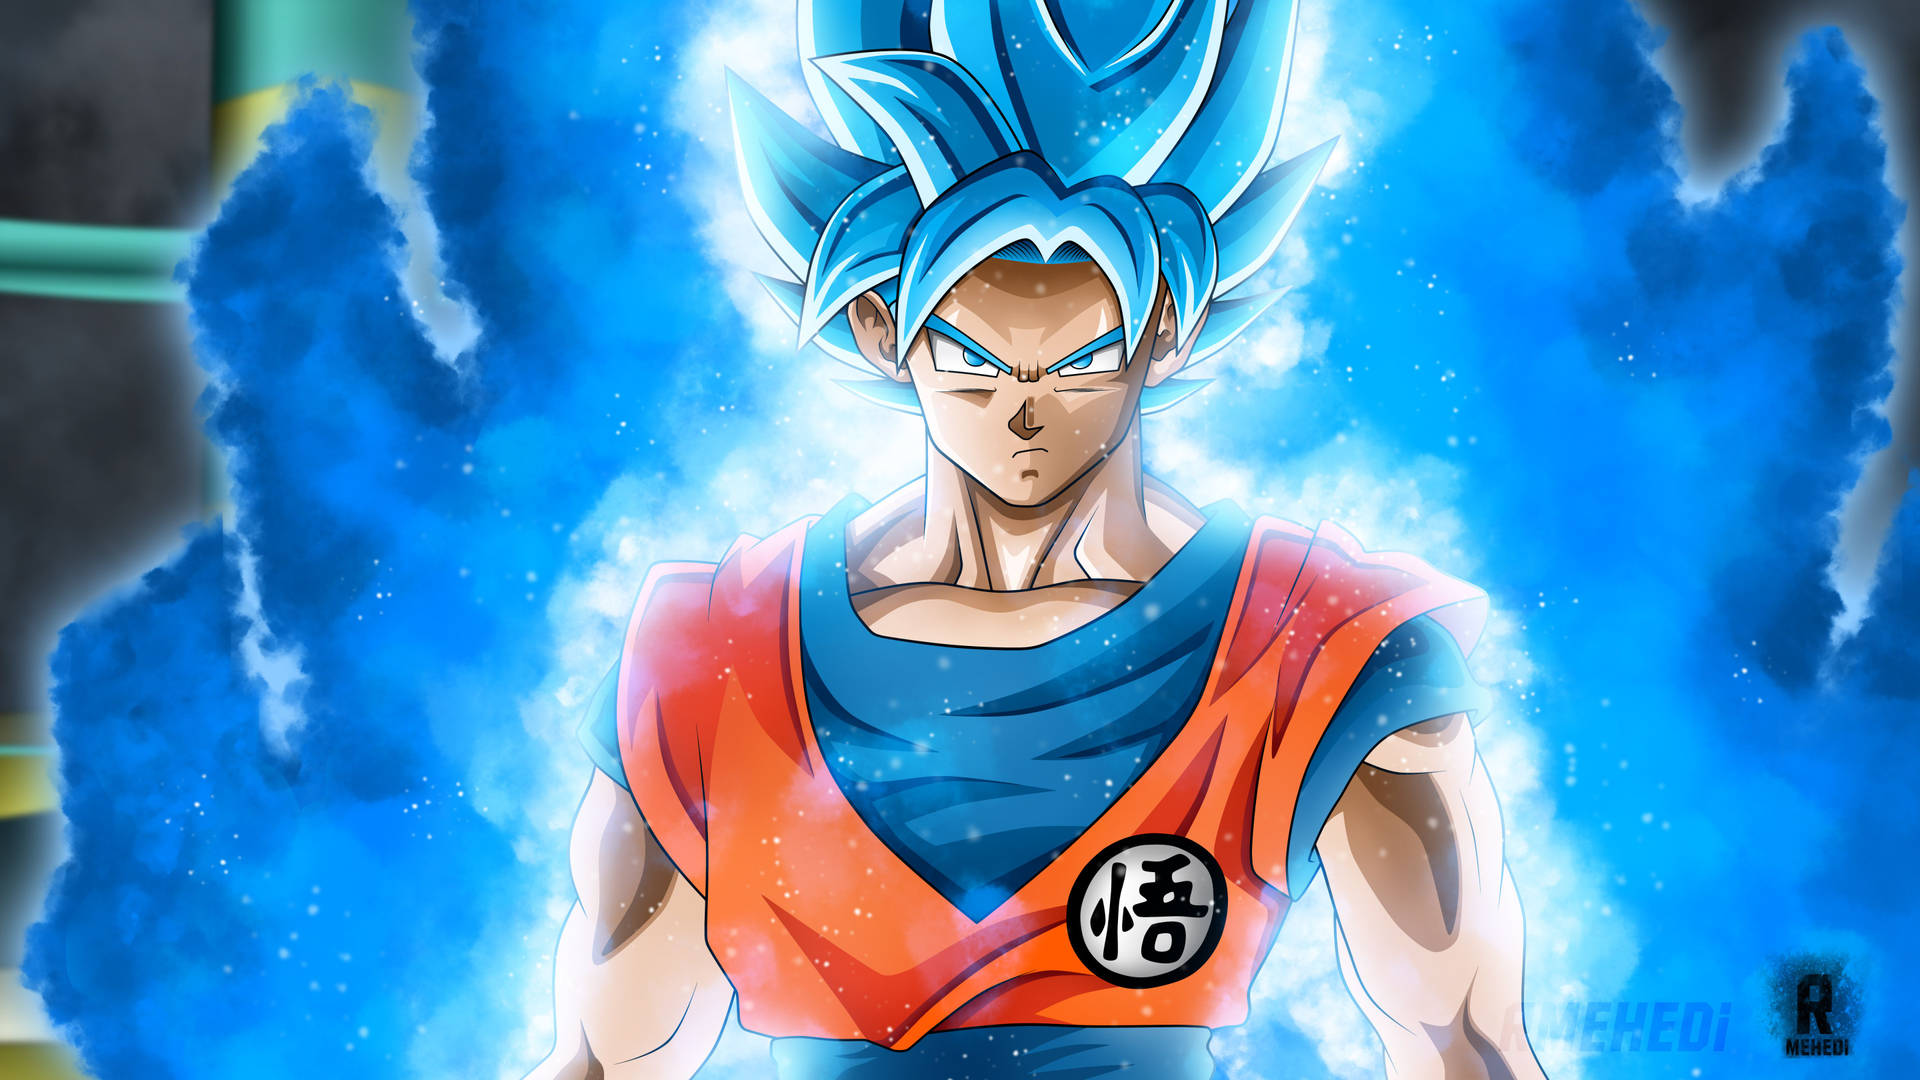 Top 999+ Goku Wallpaper Full HD, 4K✅Free to Use